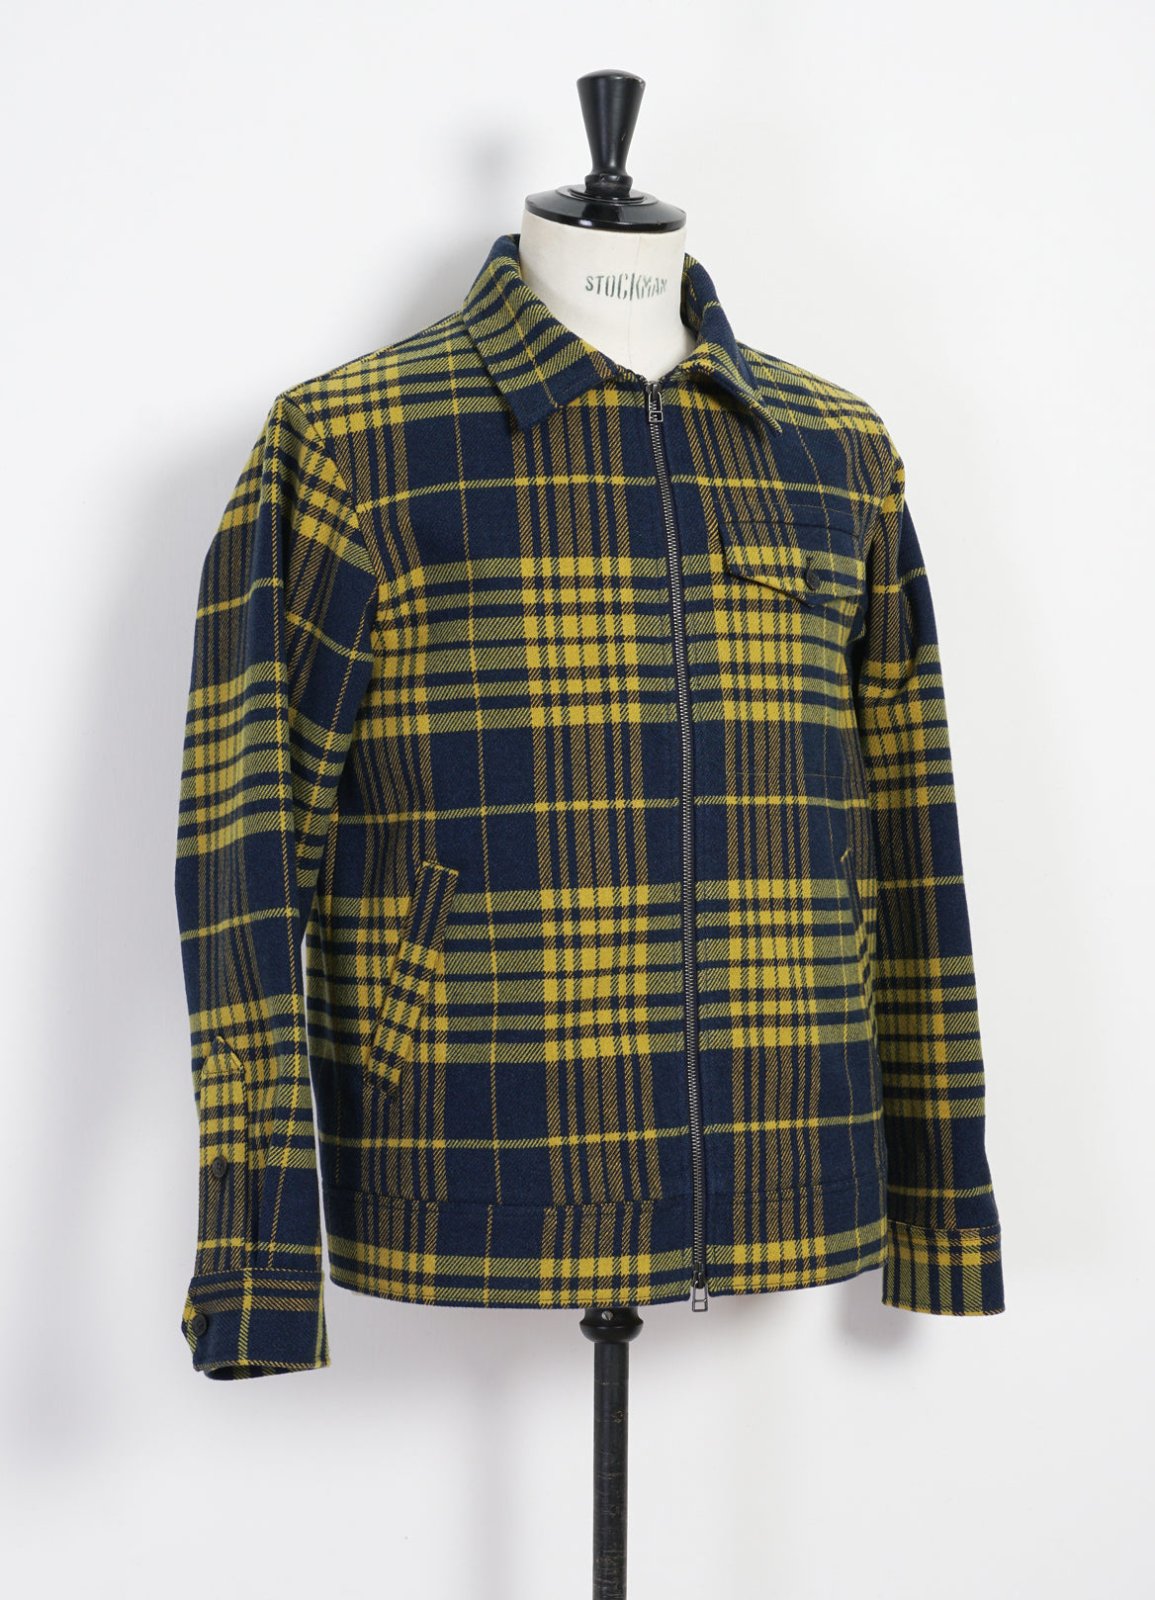 HANSEN GARMENTS - JARLE | Casual Zipper Jacket | Yellow Check - HANSEN Garments